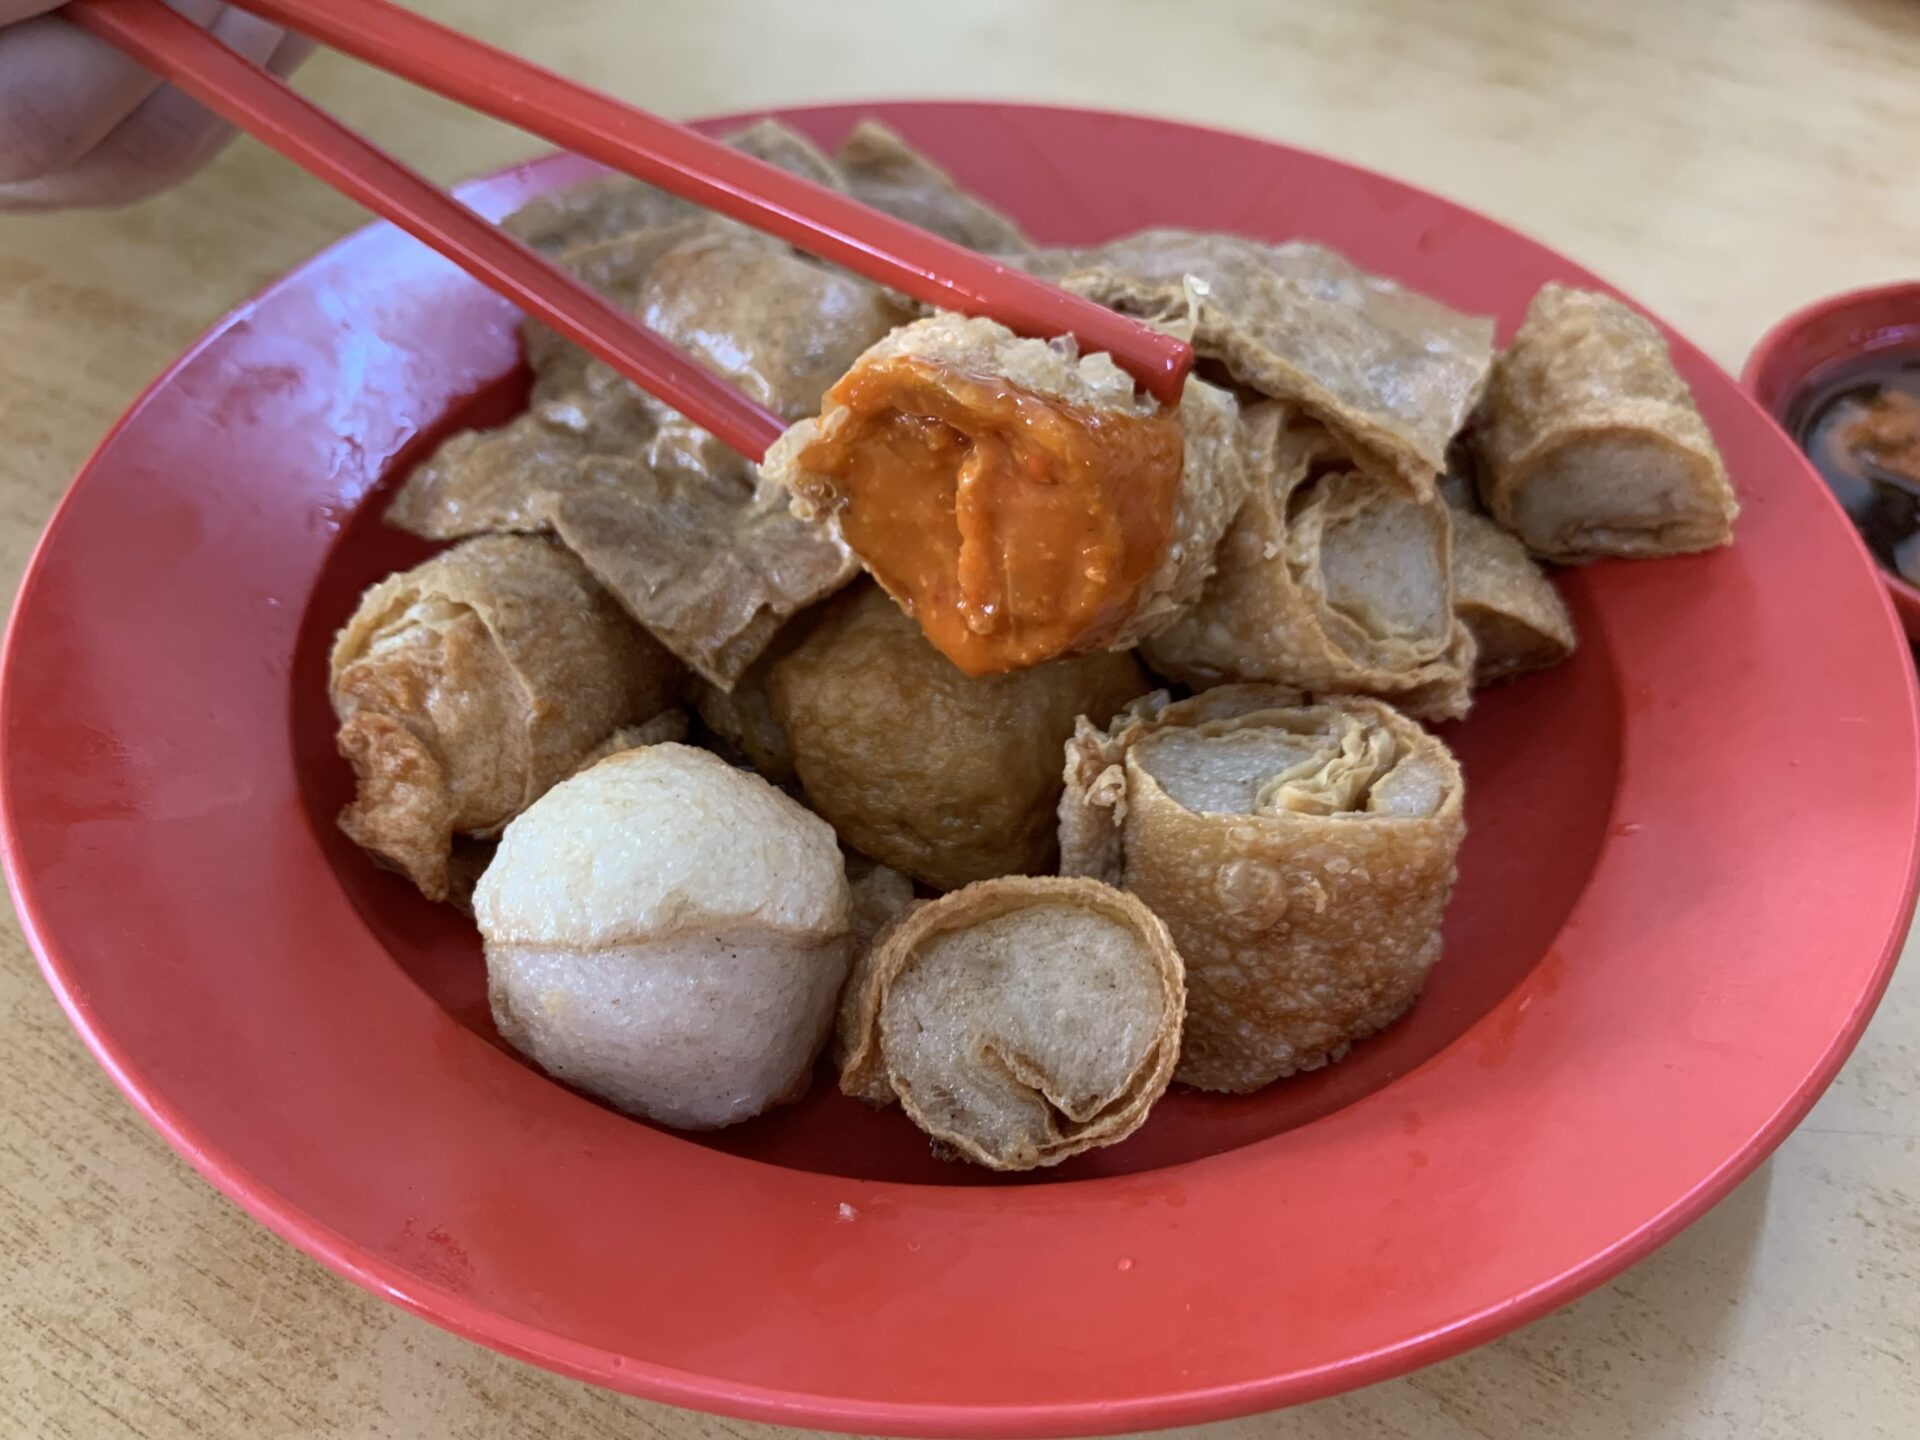 Subang Ria - Yong tau foo dipped in sauce